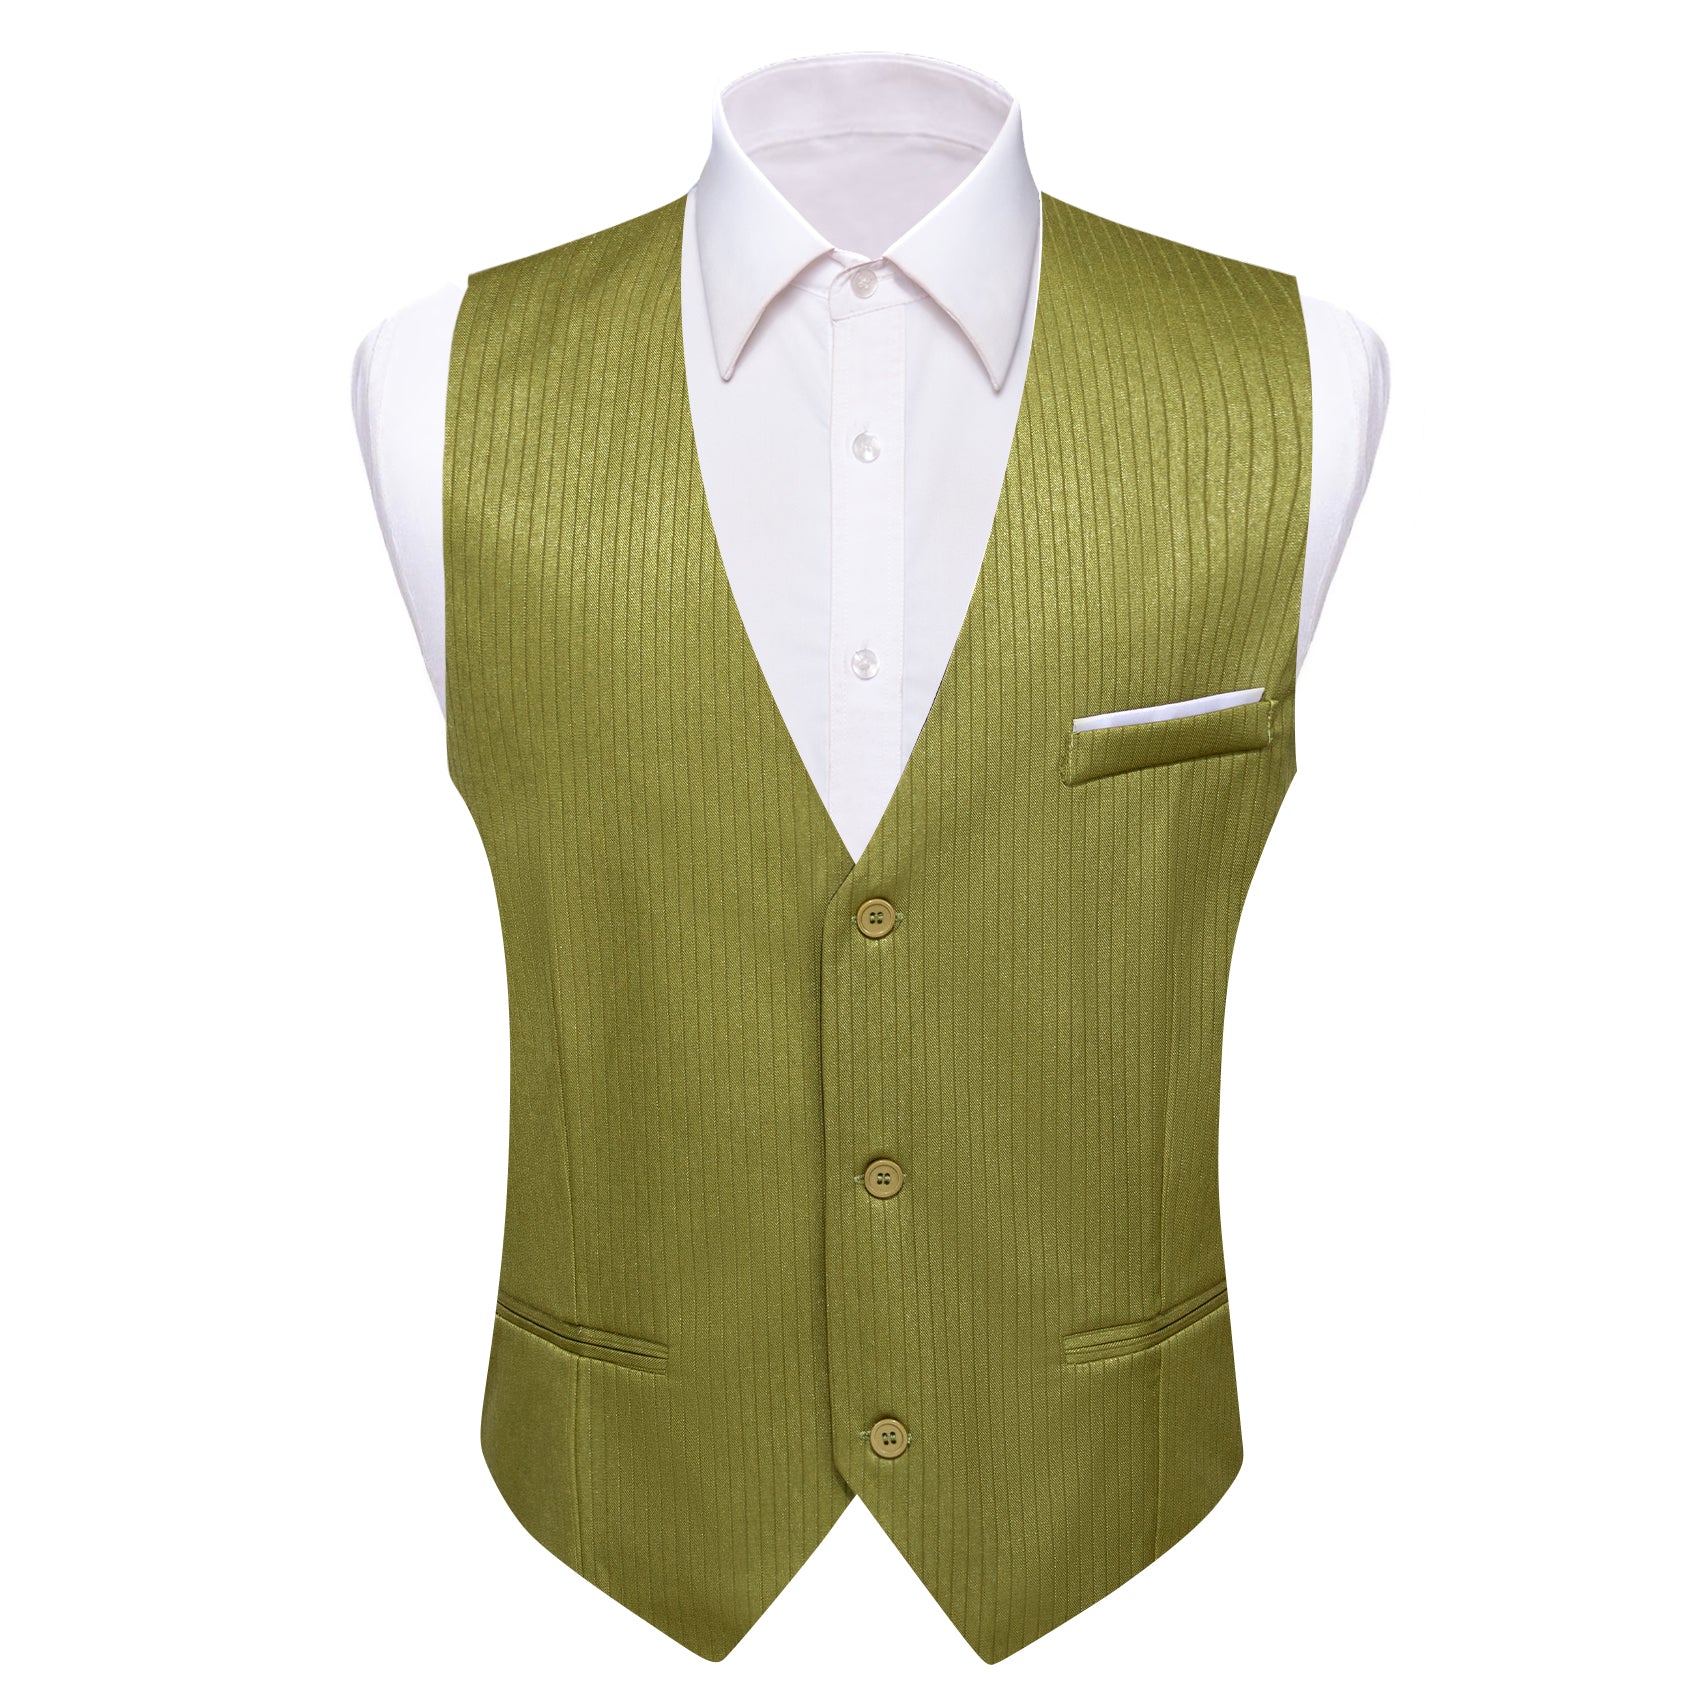 Barry.wang Men's Work Vest Olive Green Solid Business Suit Vest